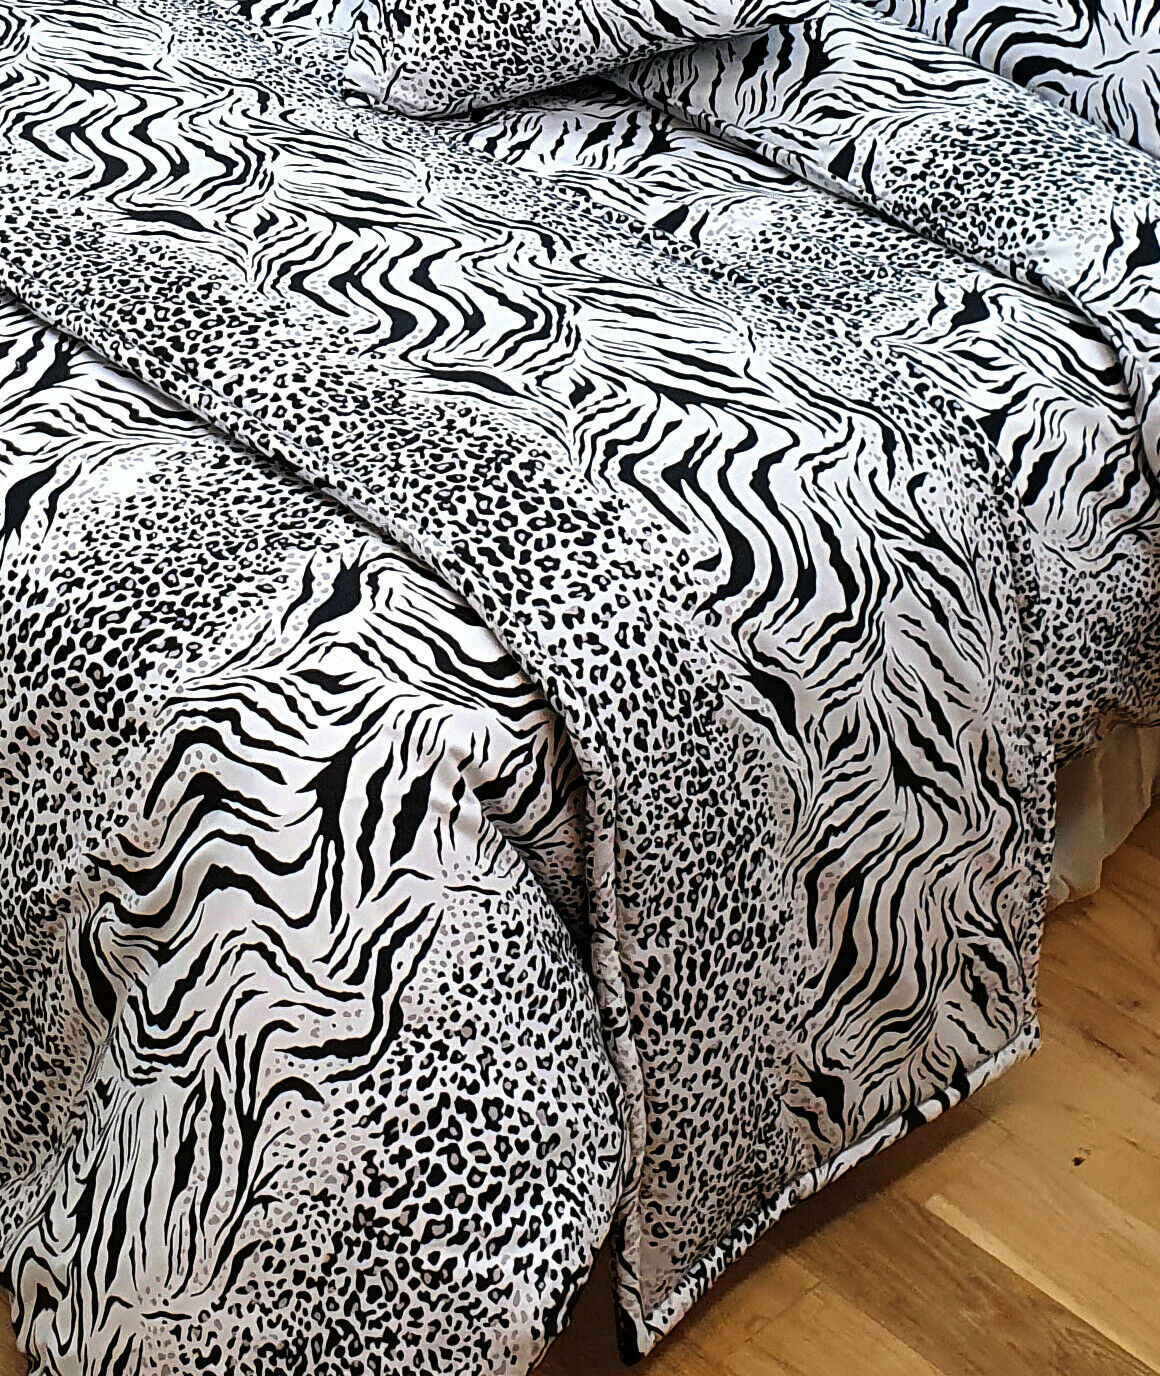 Kalahari Quilted Bed Runner Animal Print Black White Leopard Tiger Zebra